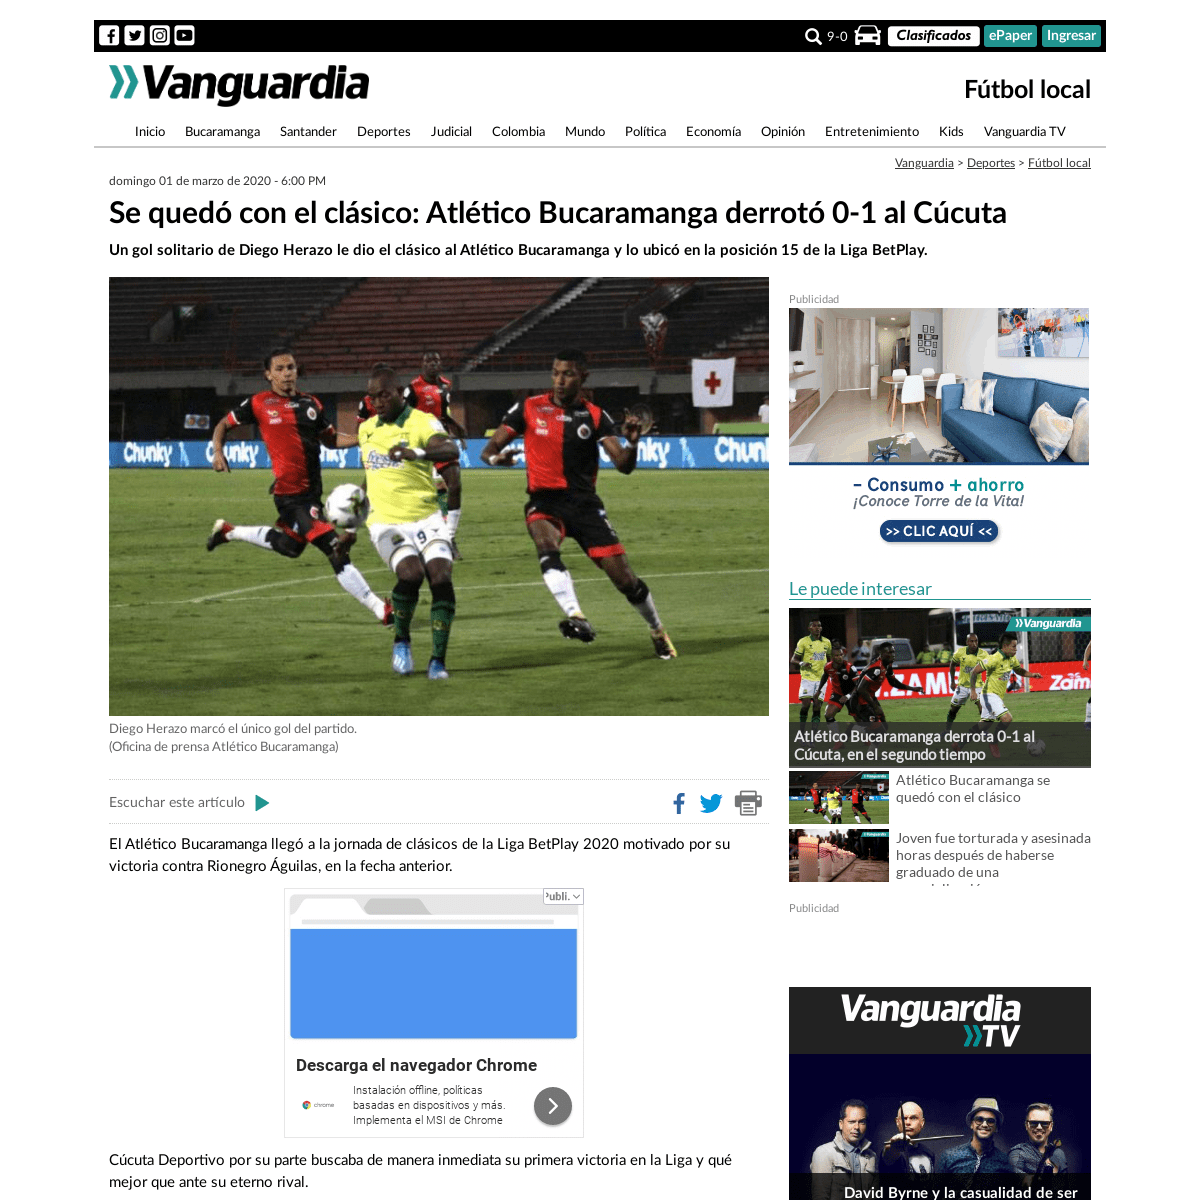 A complete backup of m.vanguardia.com/deportes/futbol-local/se-quedo-con-el-clasico-atletico-bucaramanga-derroto-0-1-al-cucuta-X